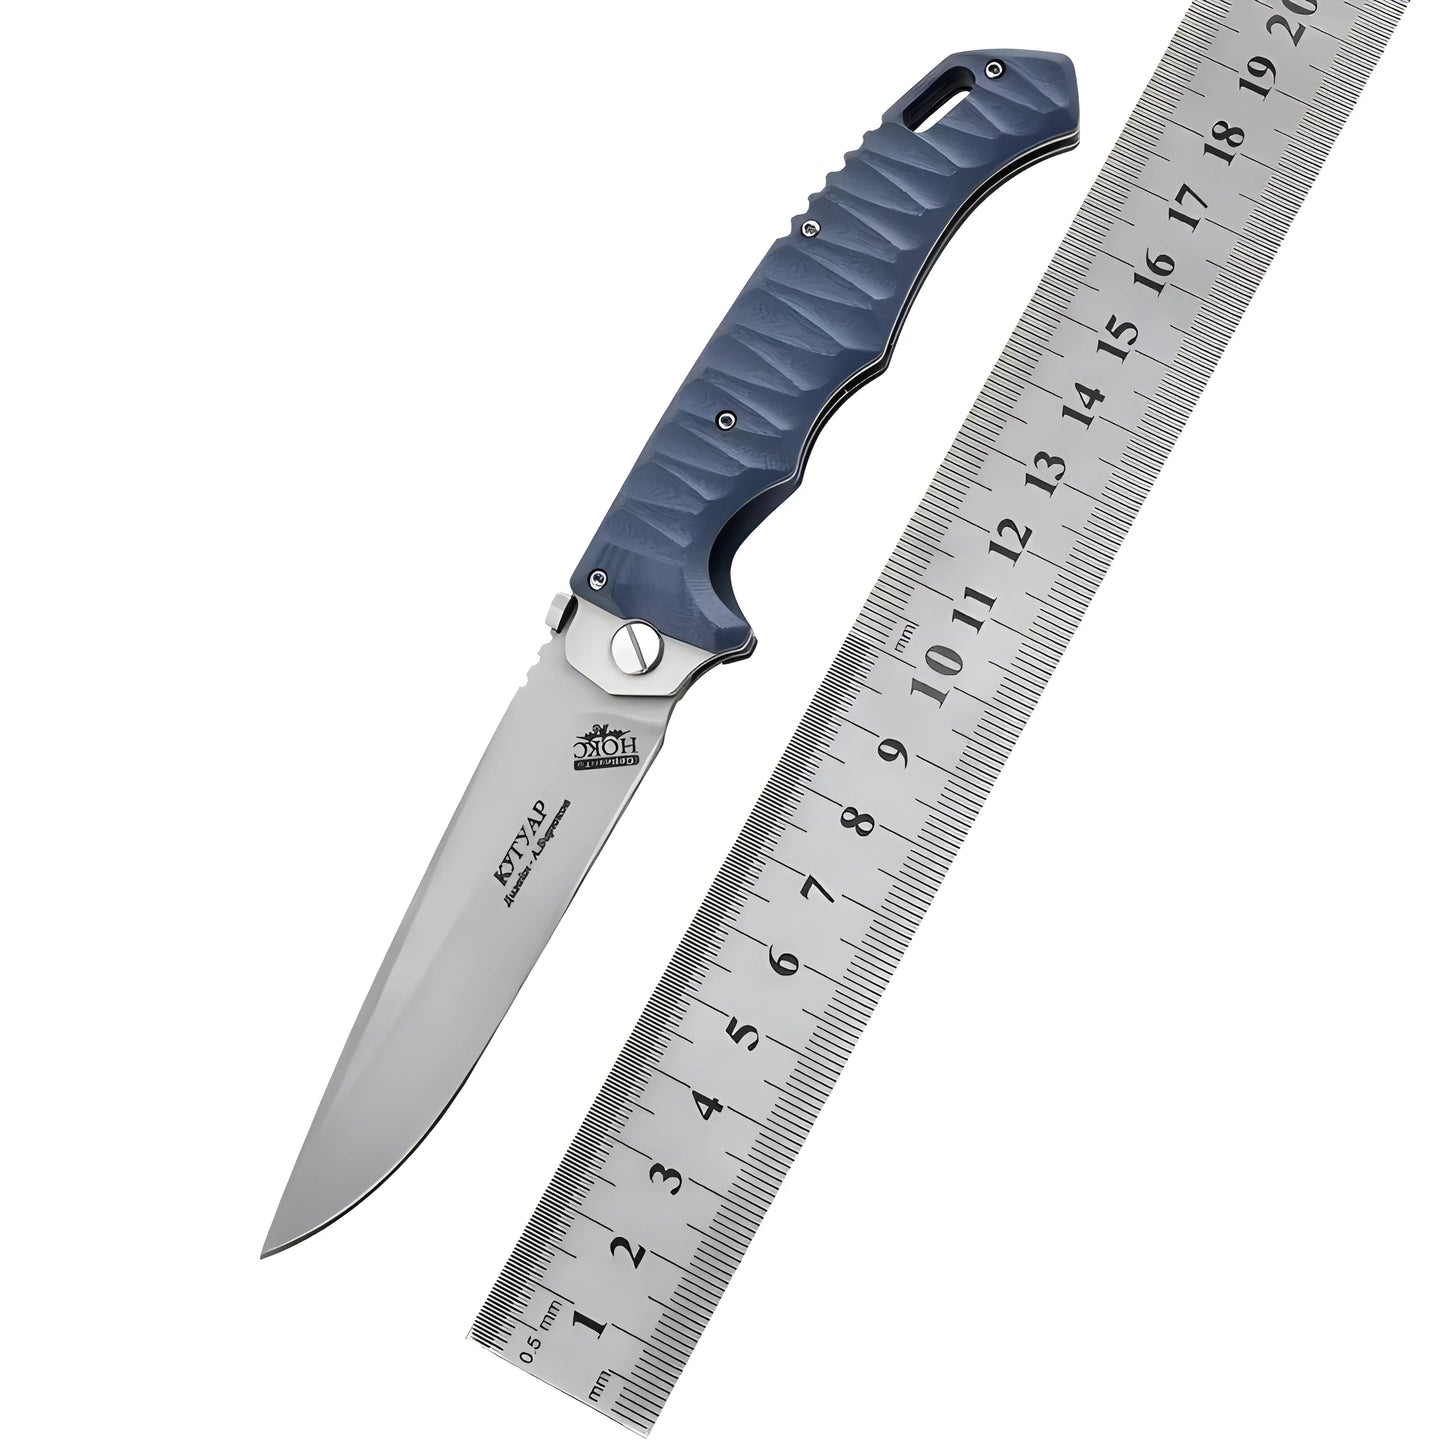 HOKC-D2 Steel folding knife G10 Handle Tactical Camping - Morning Loadout